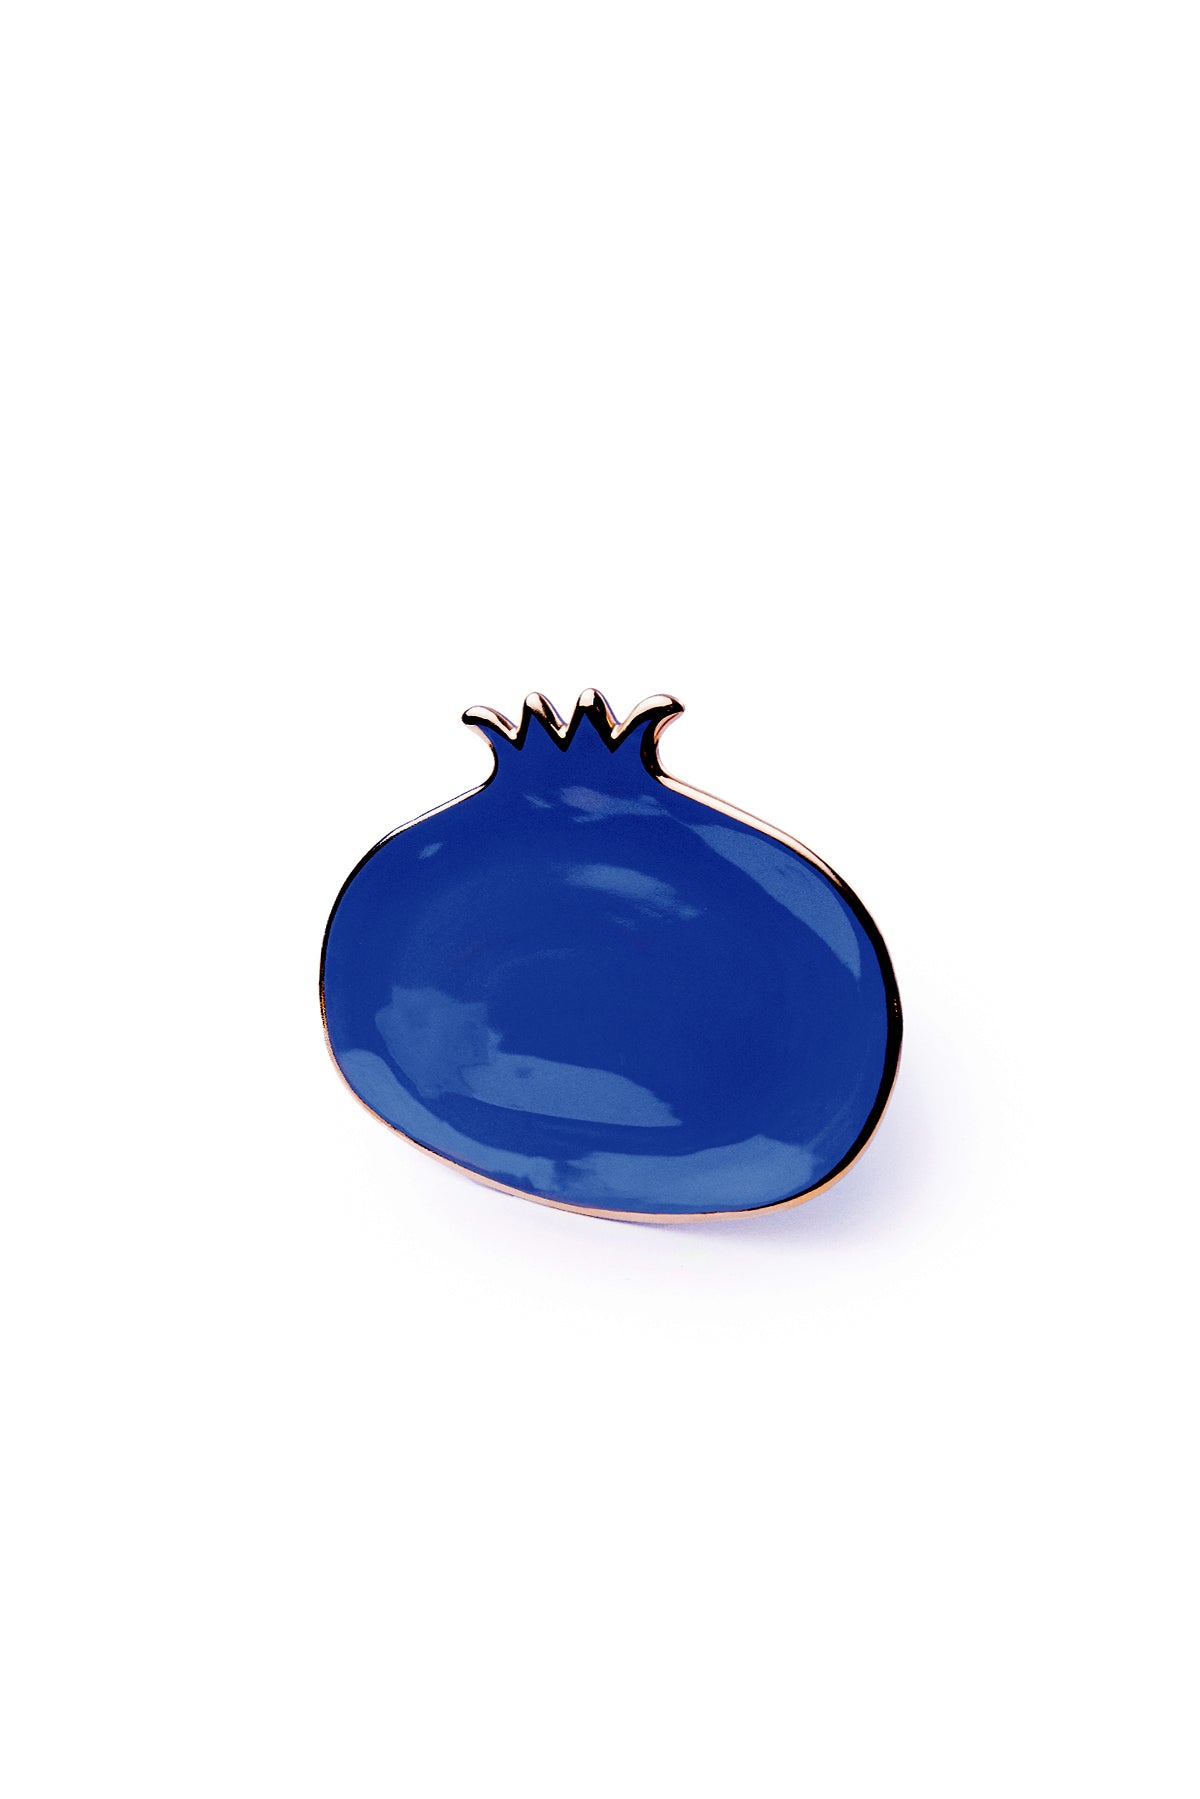 Blue Pomegranate Plate - Small